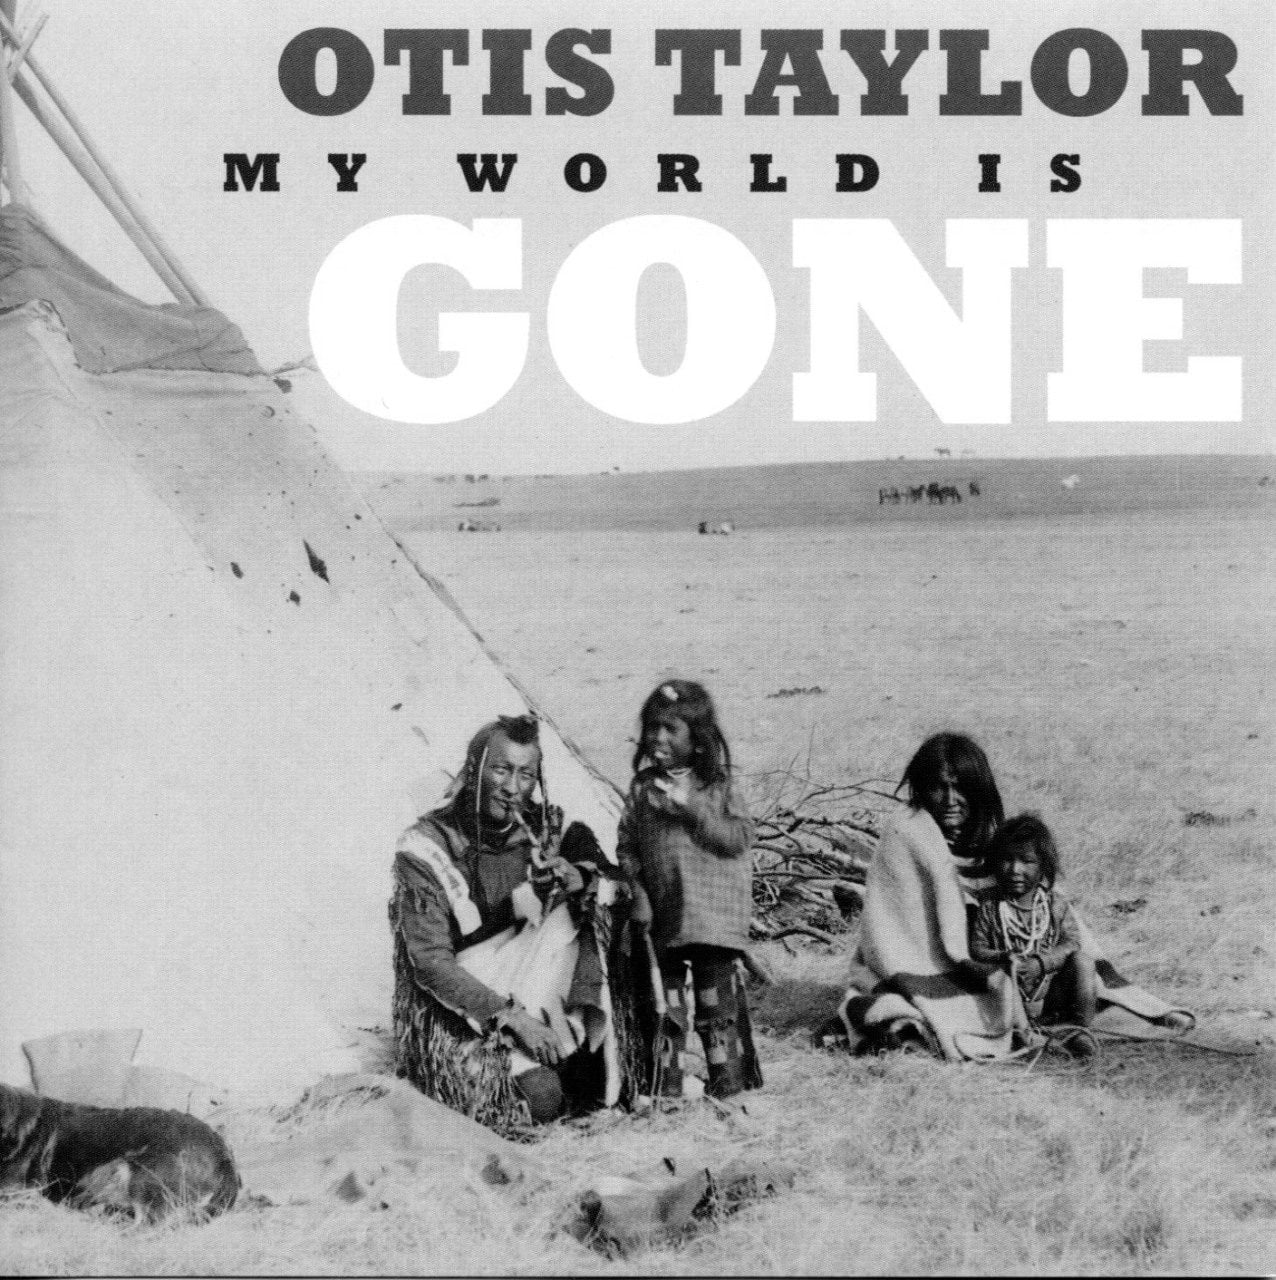 Otis Taylor – “My World Is Gone” cover album